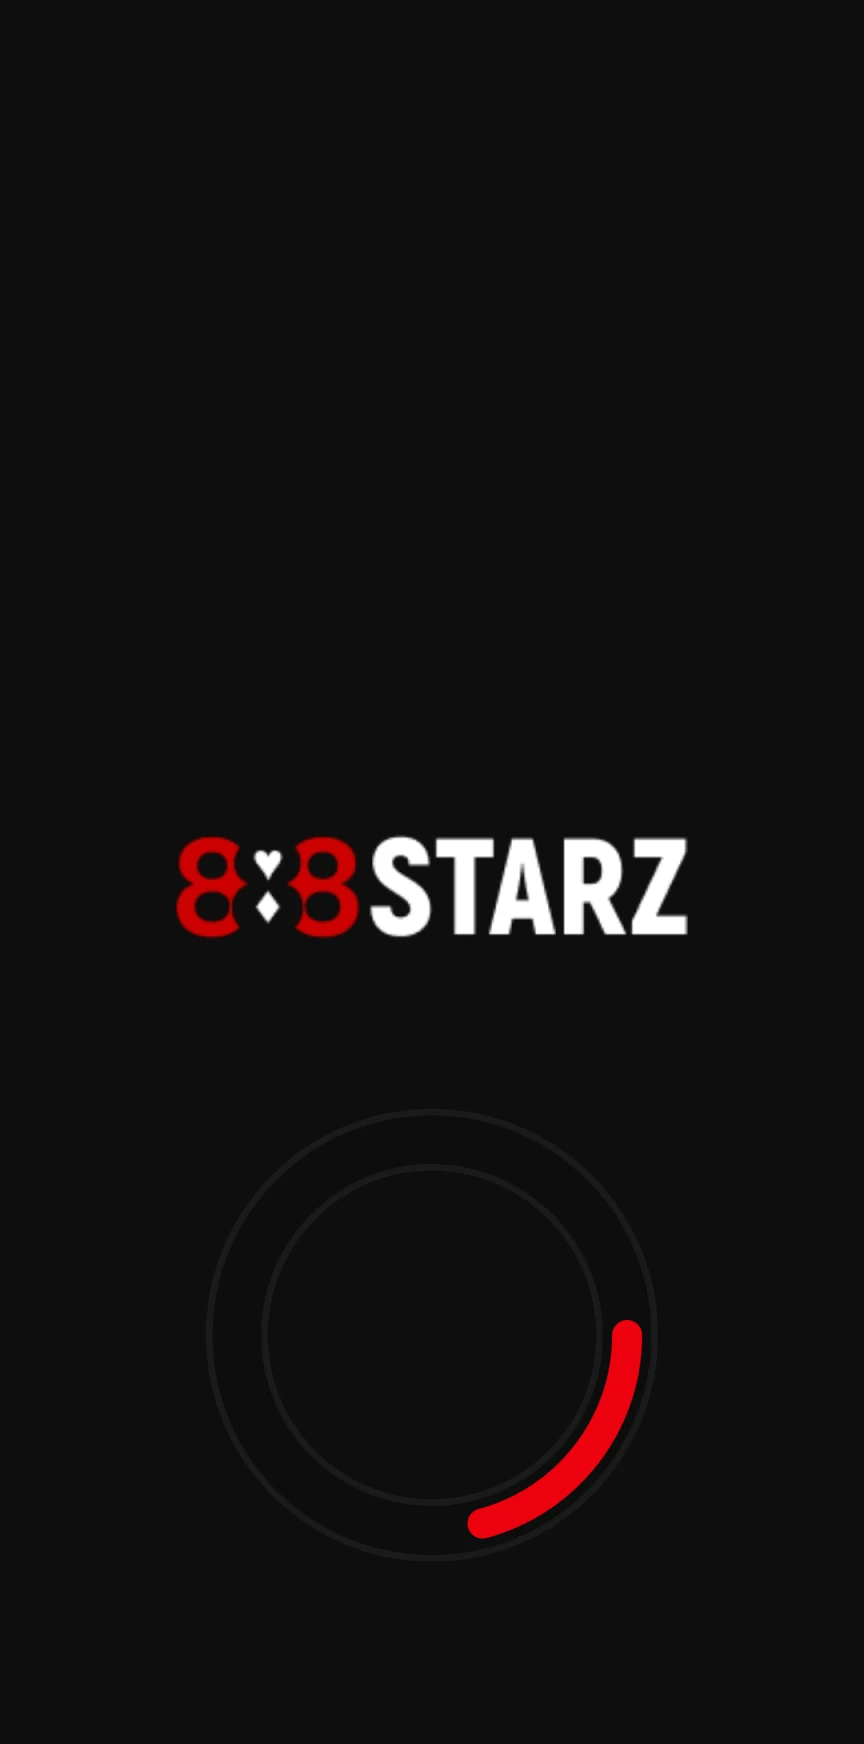 Install the 888starz app for iOS.